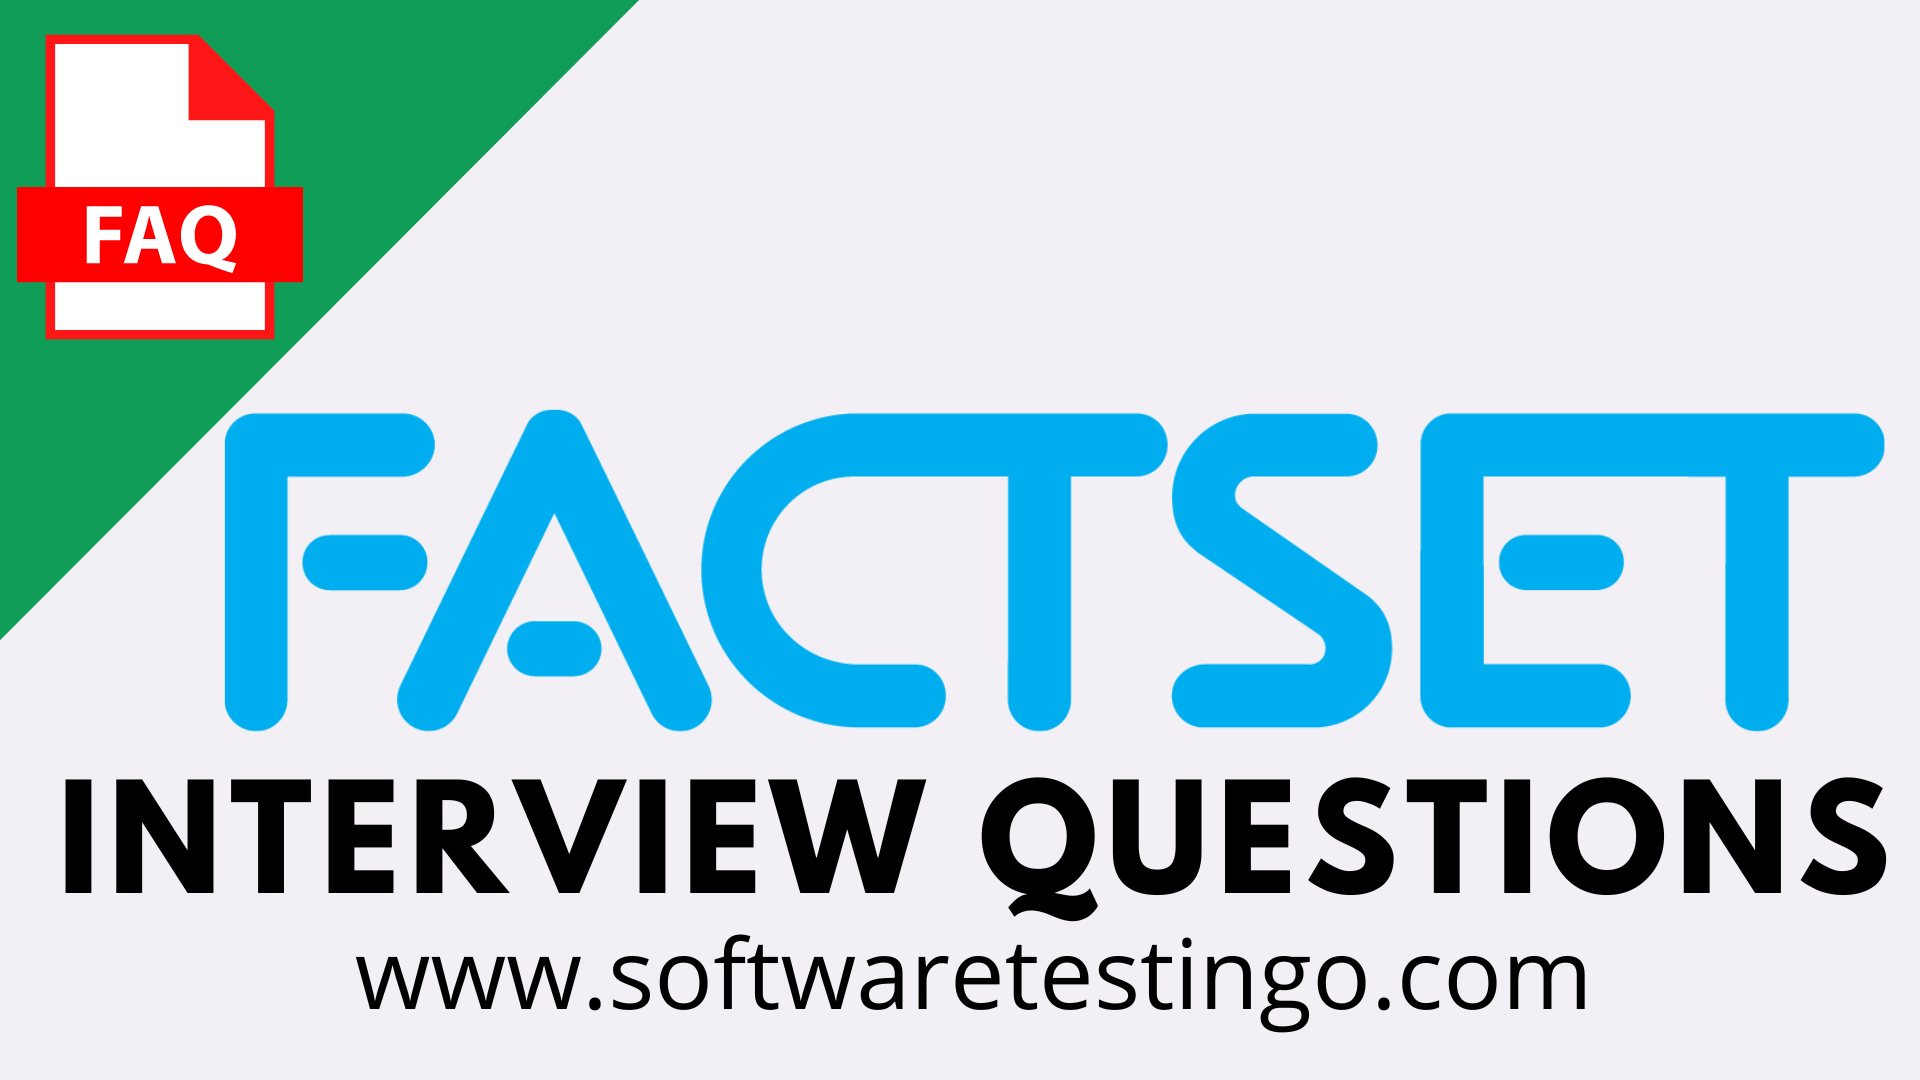 FactSet Interview Questions